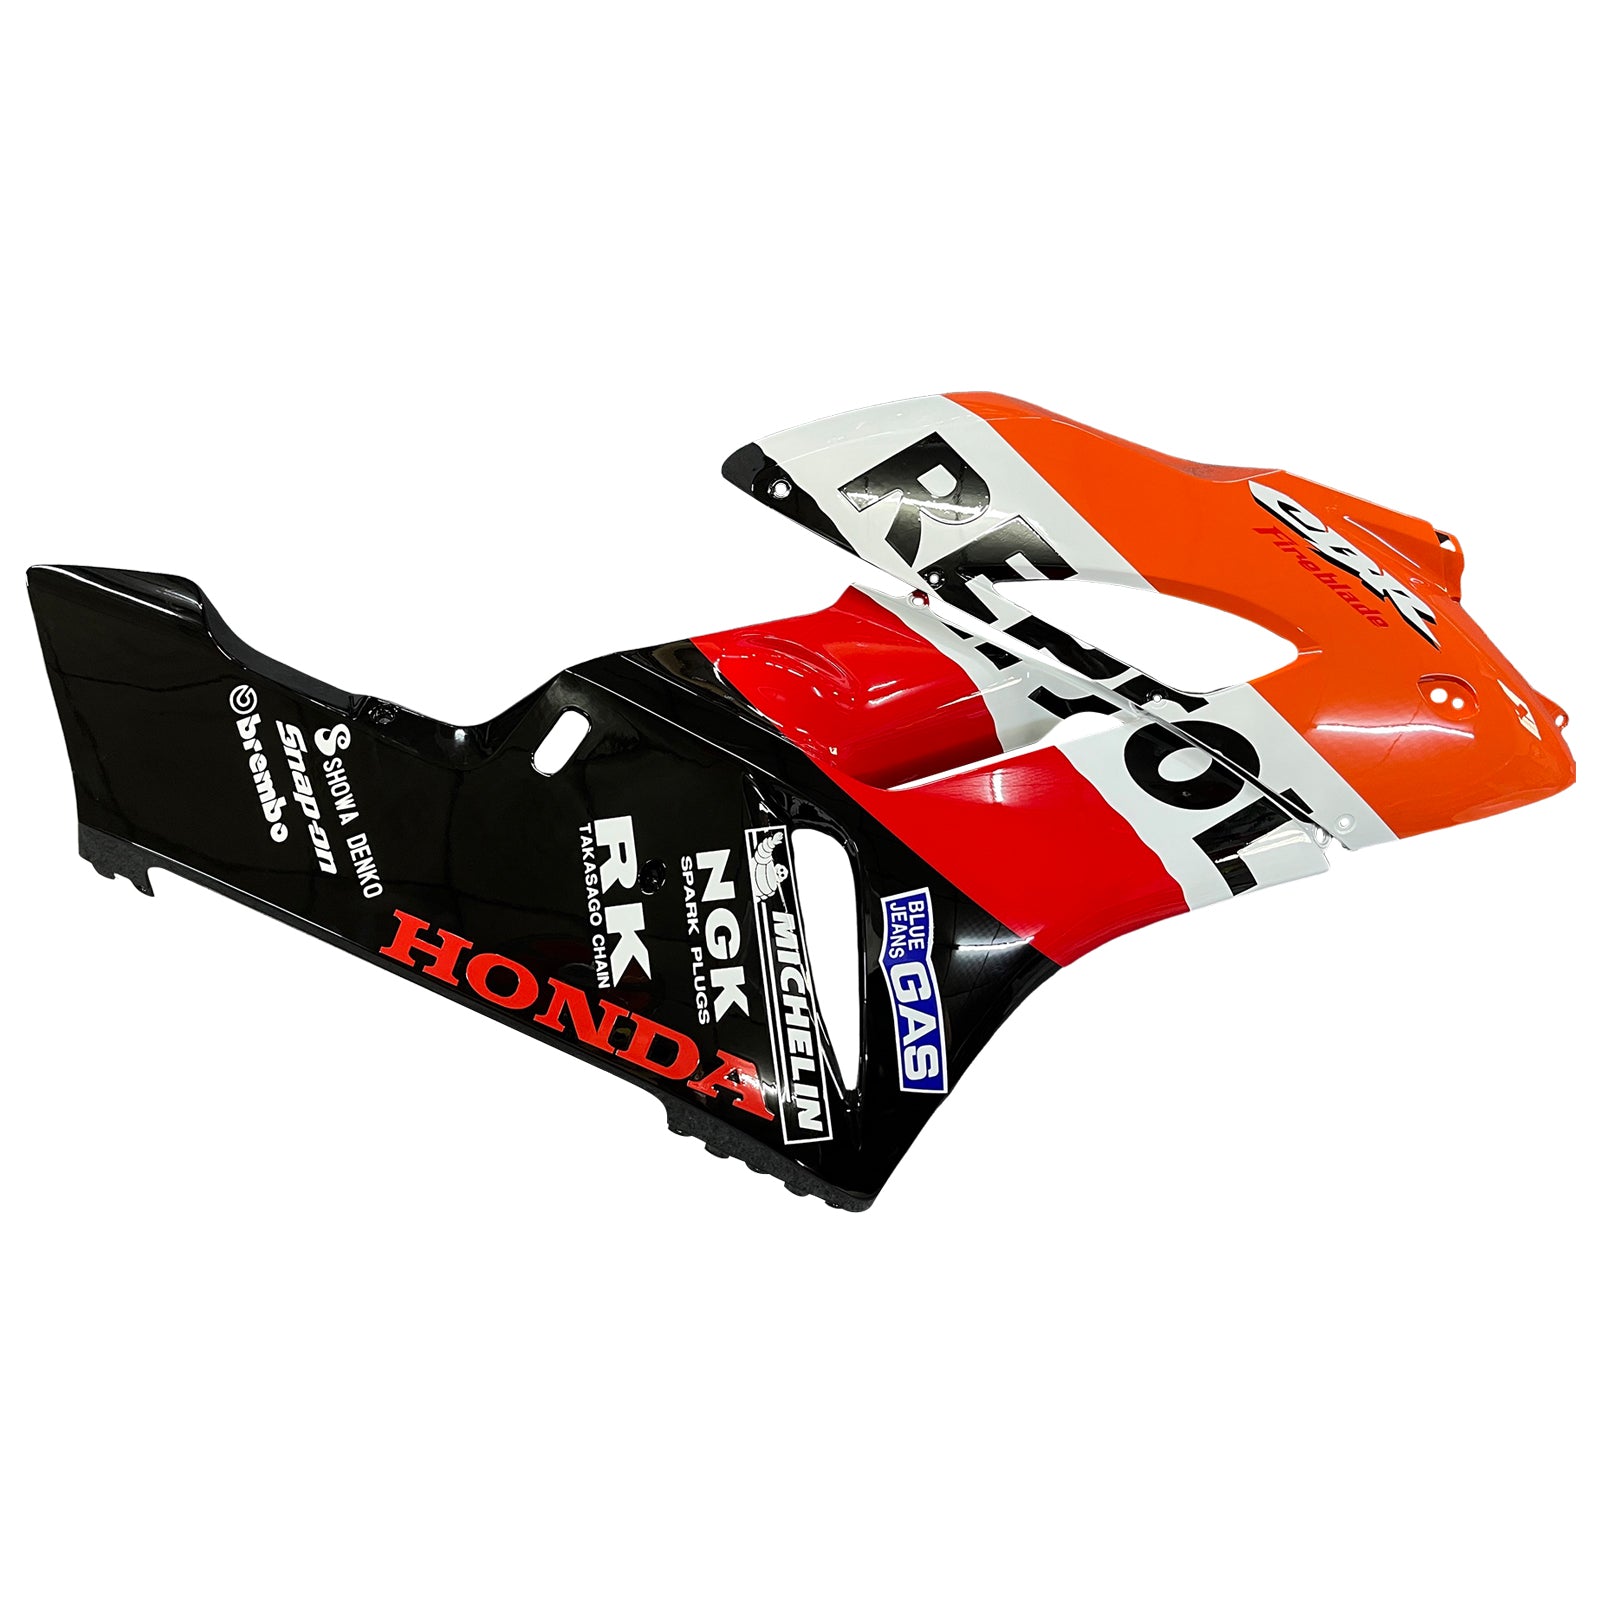 Amotopart Fairings Honda CBR1000RR 2004-2005 Fairing Repsol Racing Black Orange Fairing Kit